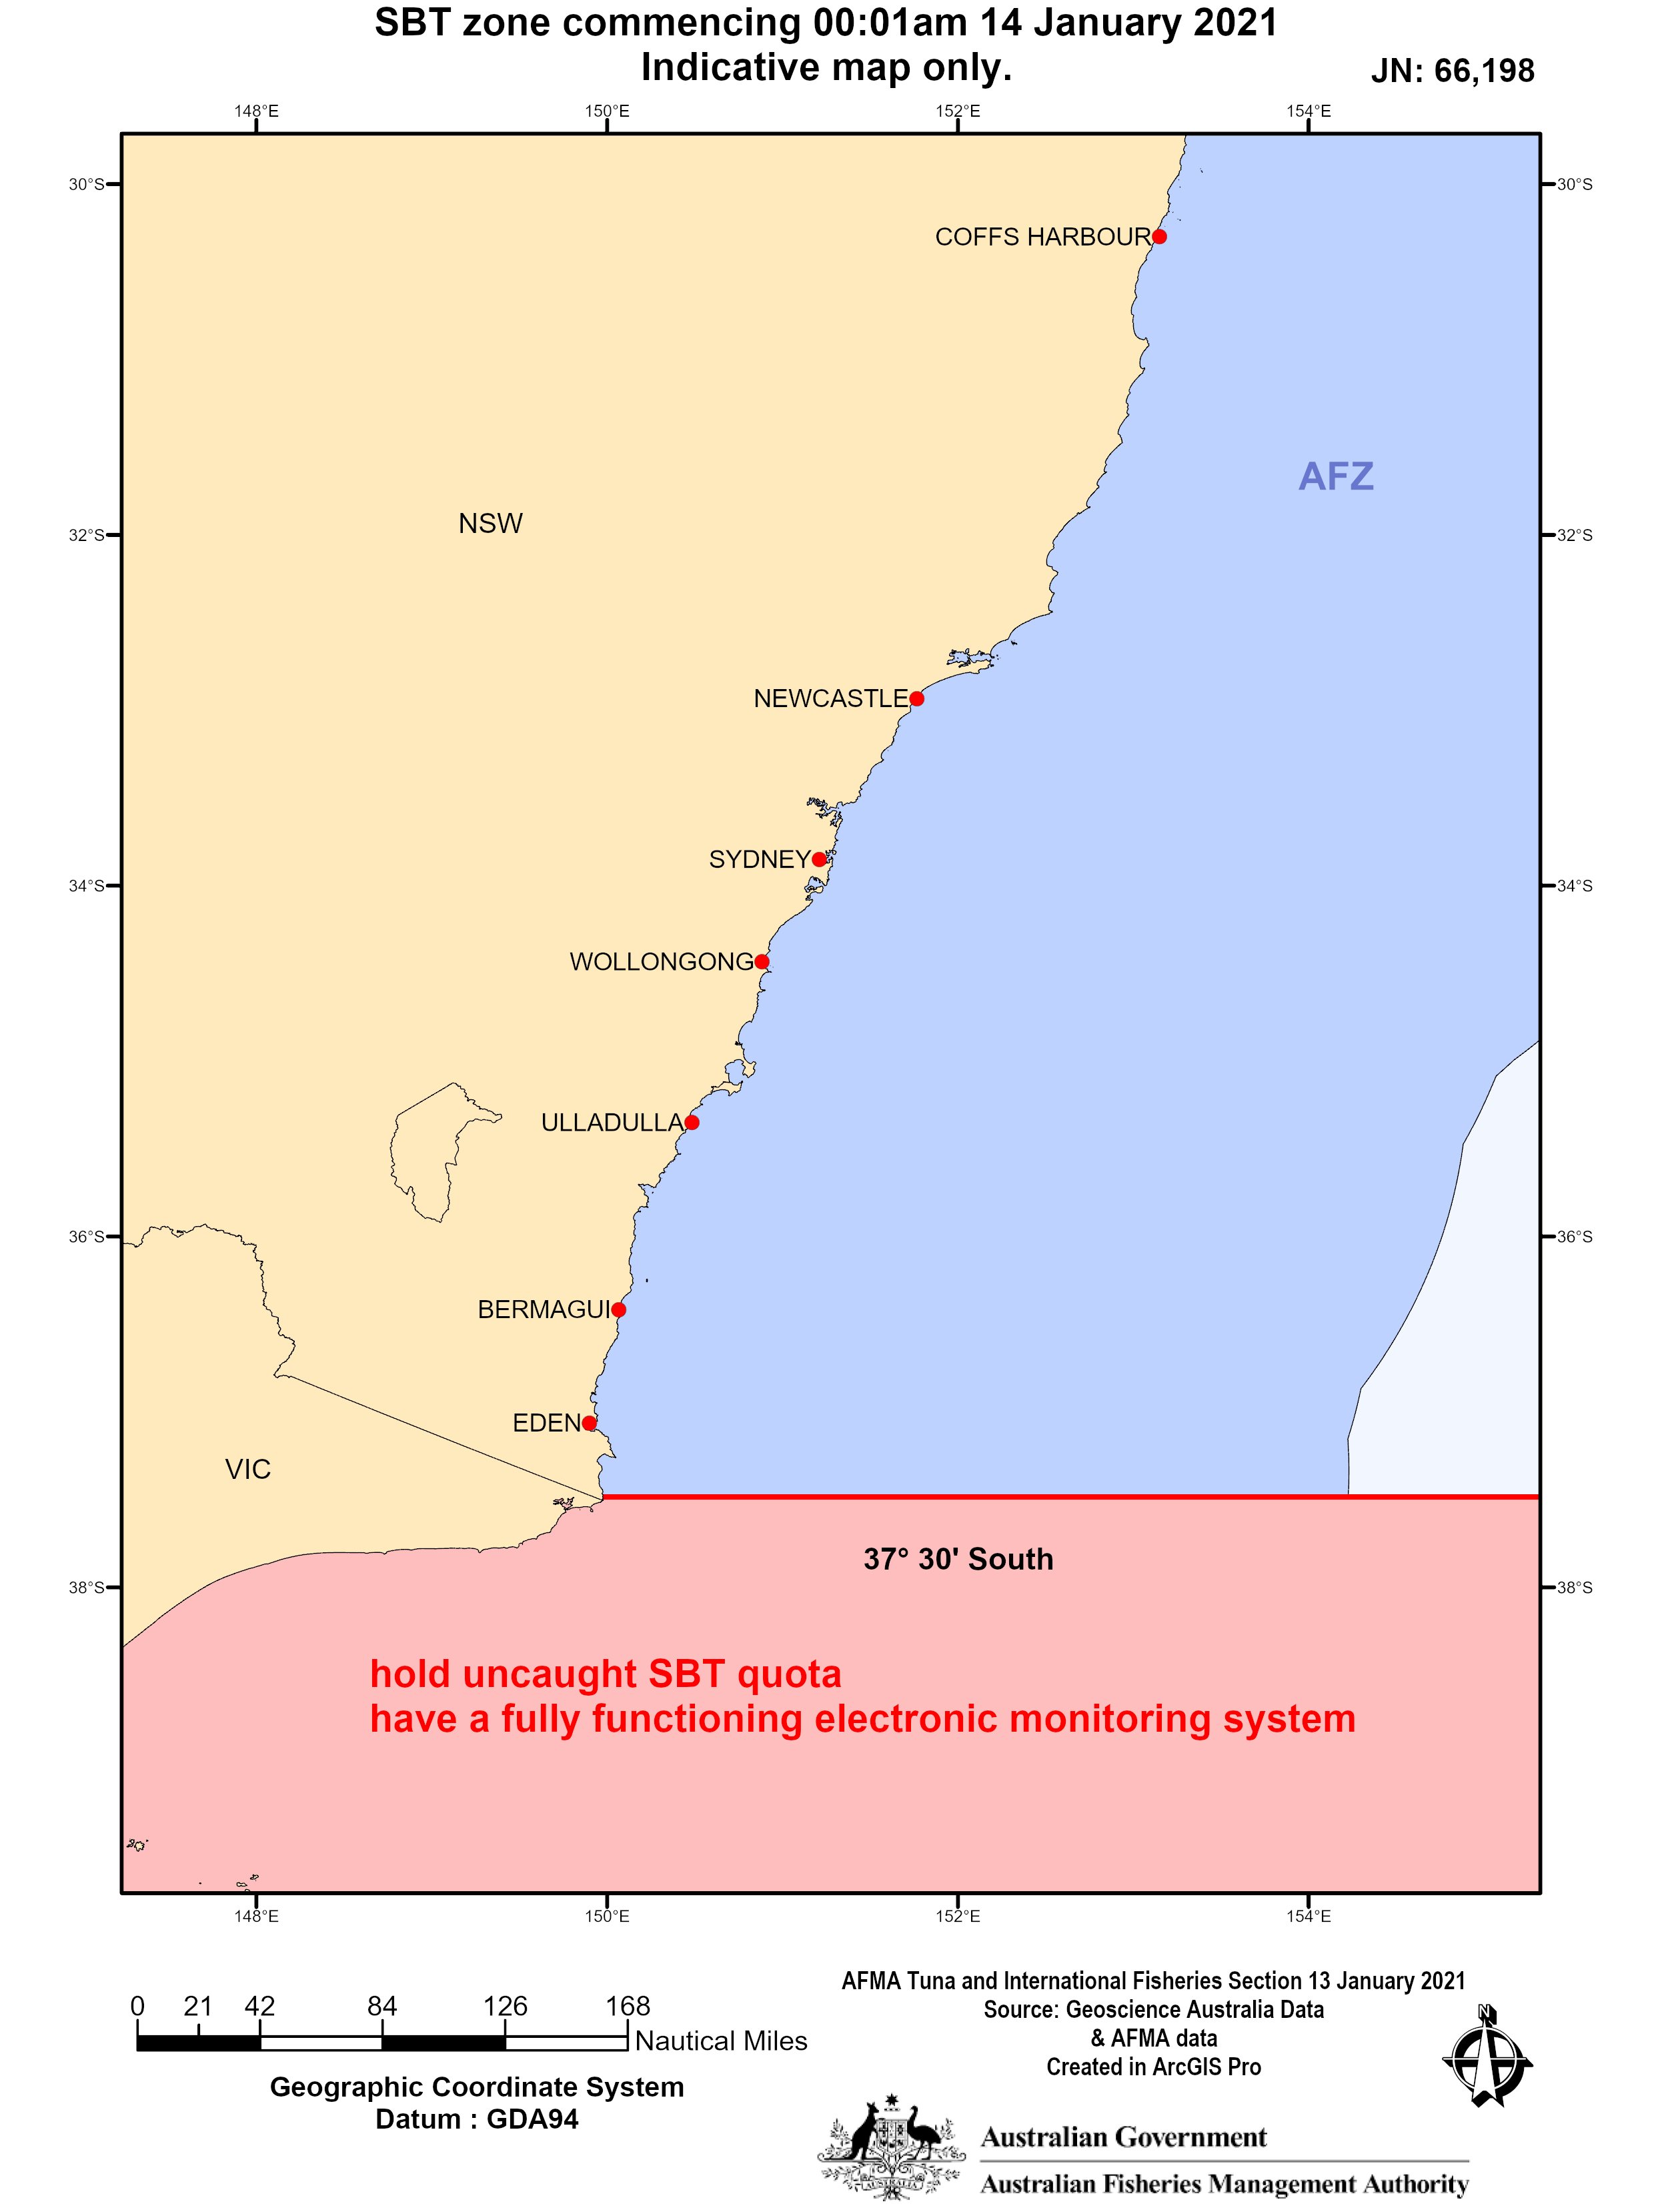 Australian fishing zones Source: (Australian Fisheries Management